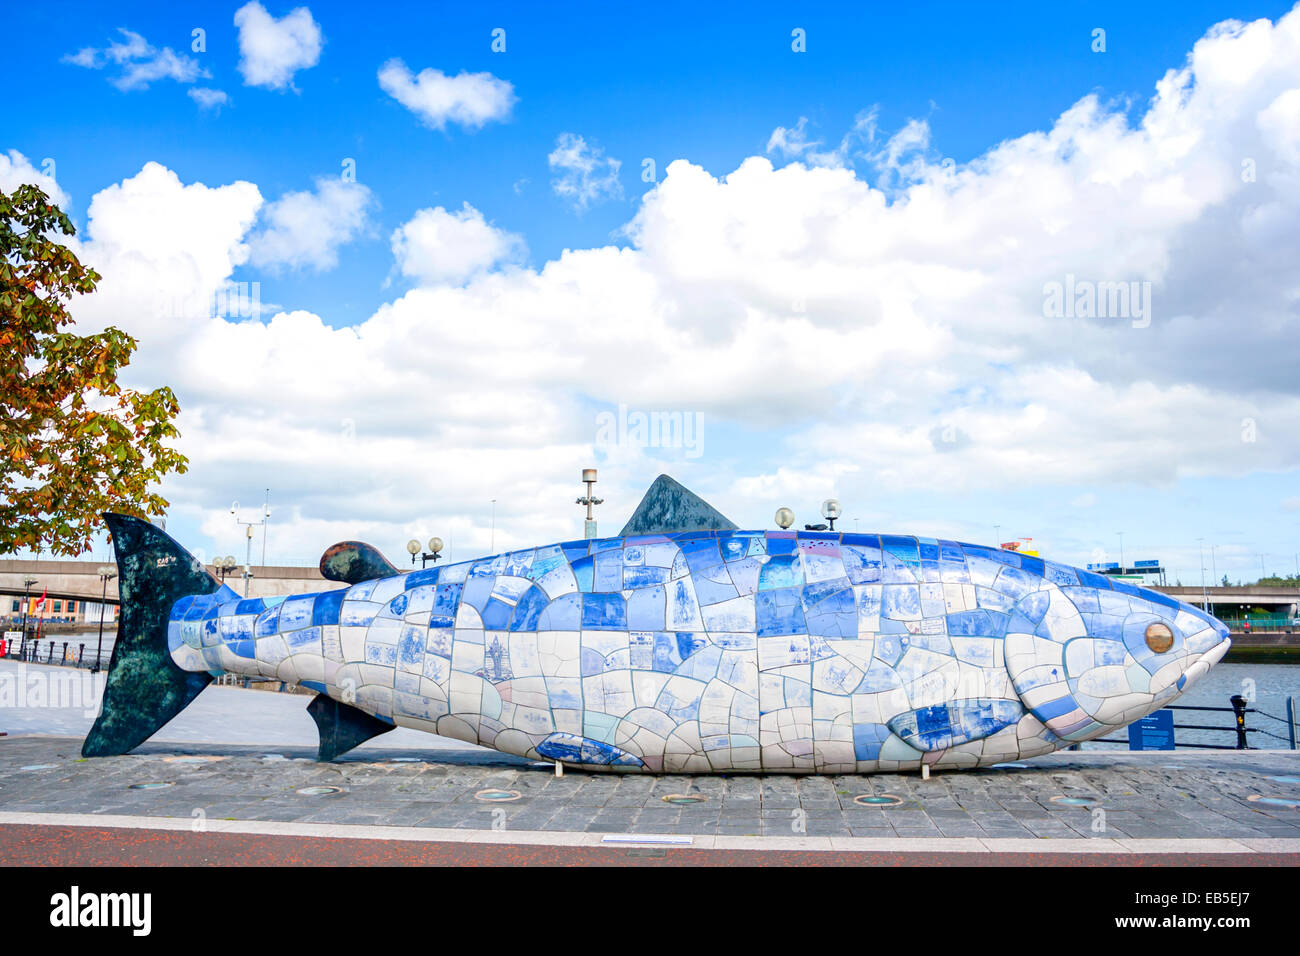 Belfast, Northern Ireland - Aug 19, 2014: Ceramic mosaic fish in Belfast, Northern Ireland on August 19, 2014 Stock Photo